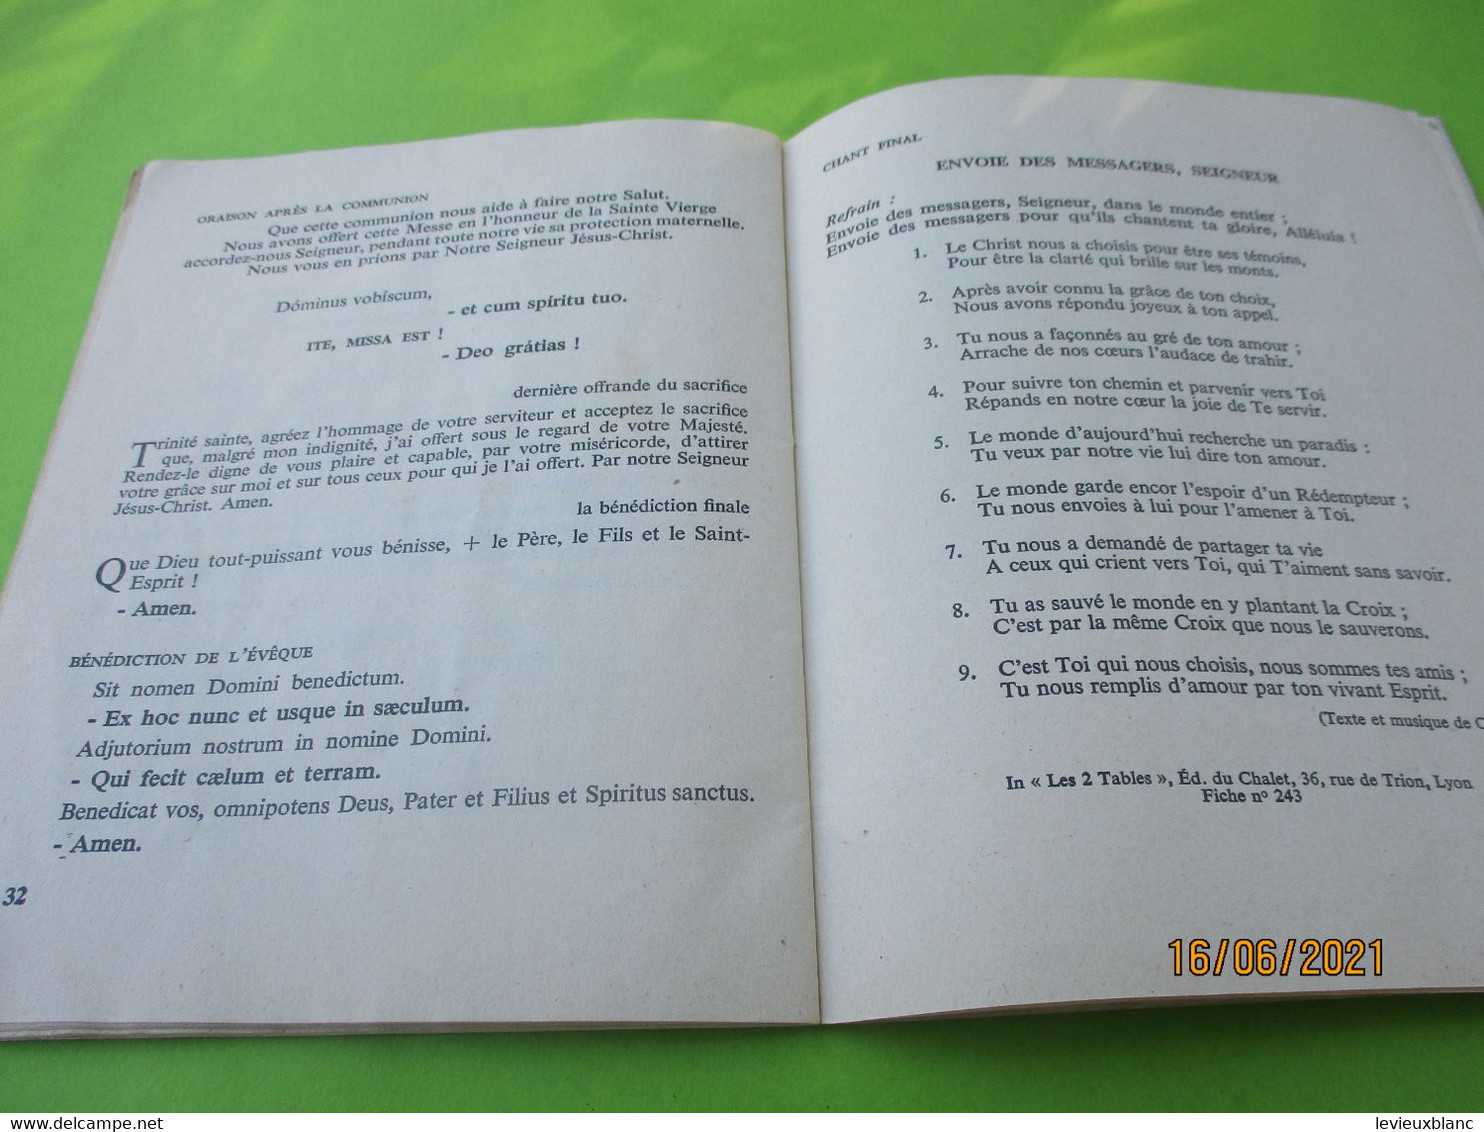 Petit Guide du Pèlerin de CHARTRES/ Fascicule/Georges ASSEMAINE/ Tardy Bourges/1958                CAN855